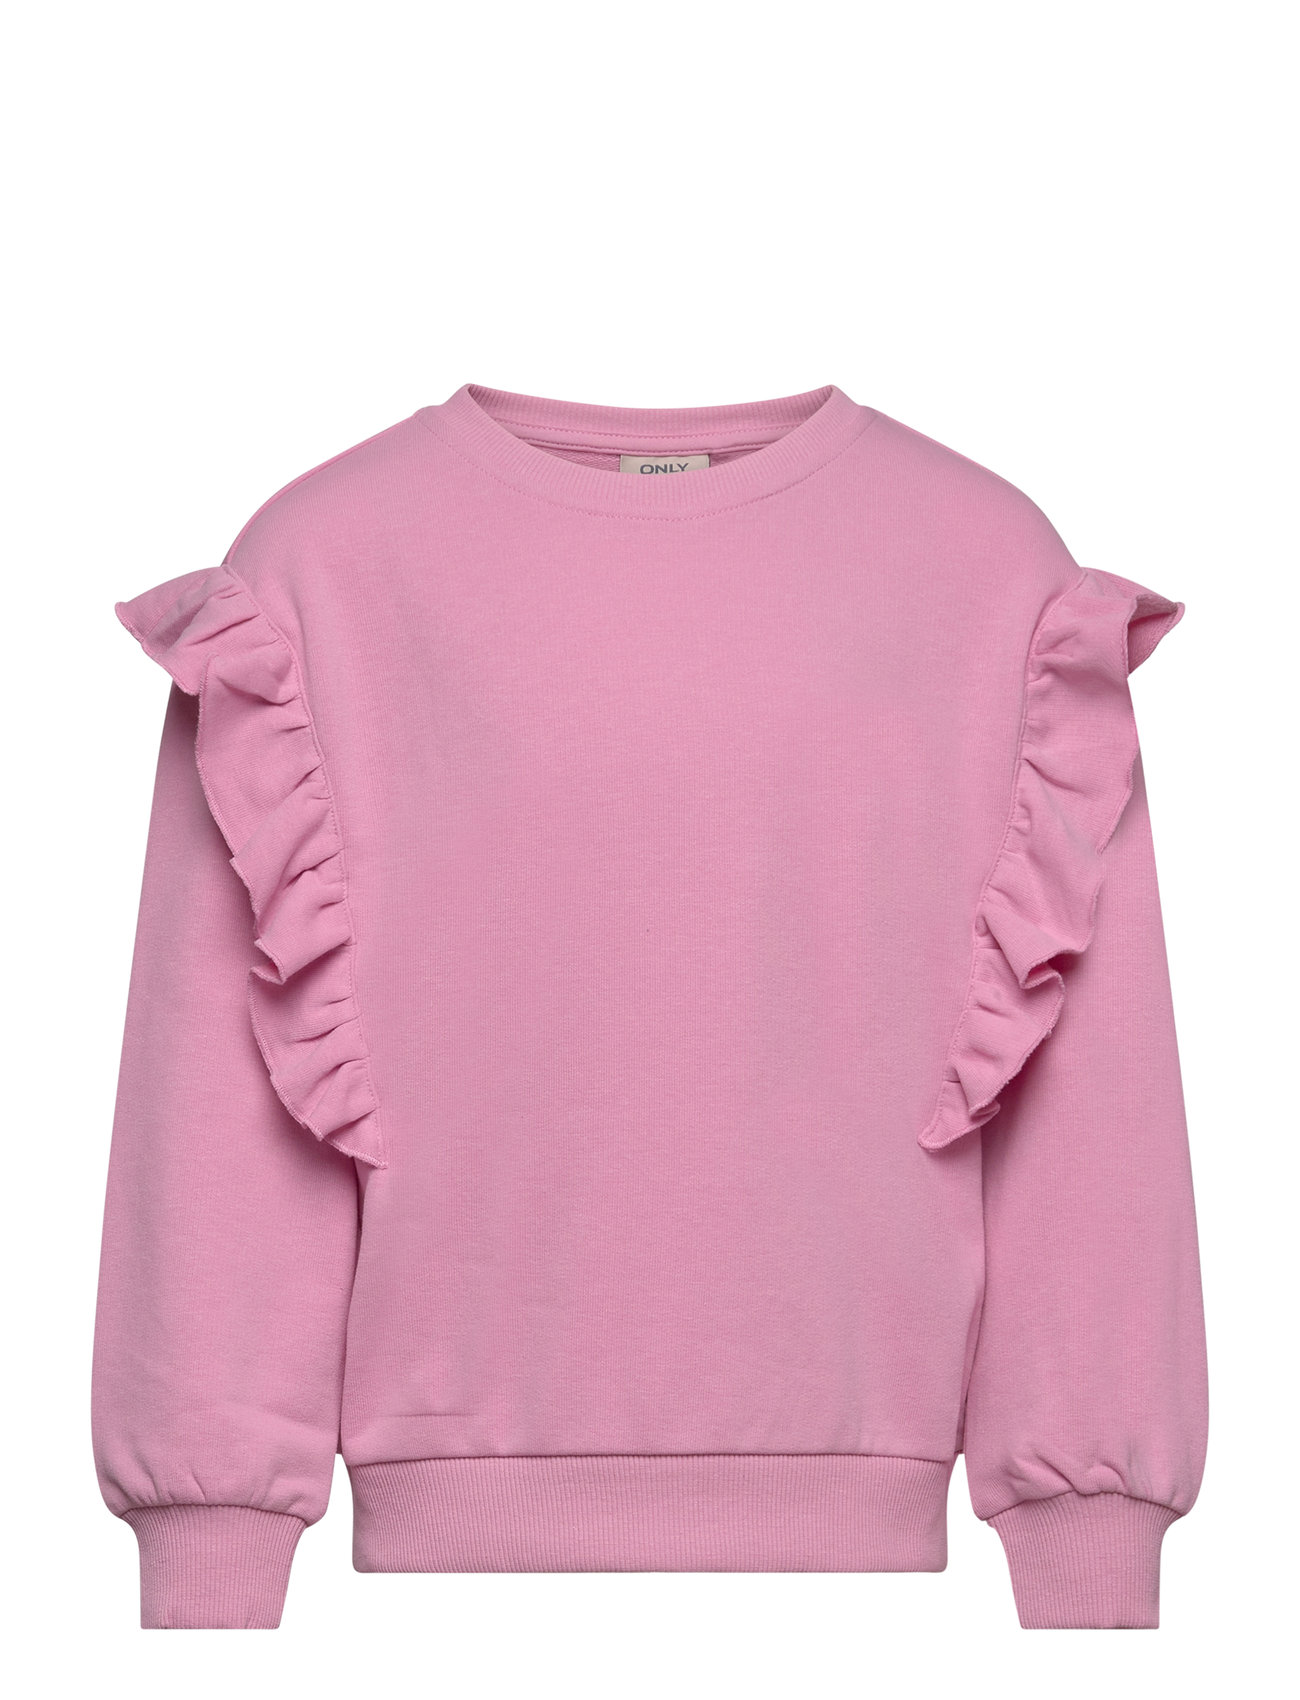 Kmgnew Ofelia L/S Frill O-Neck Ub Swt Tops Sweatshirts & Hoodies Sweatshirts Pink Kids Only